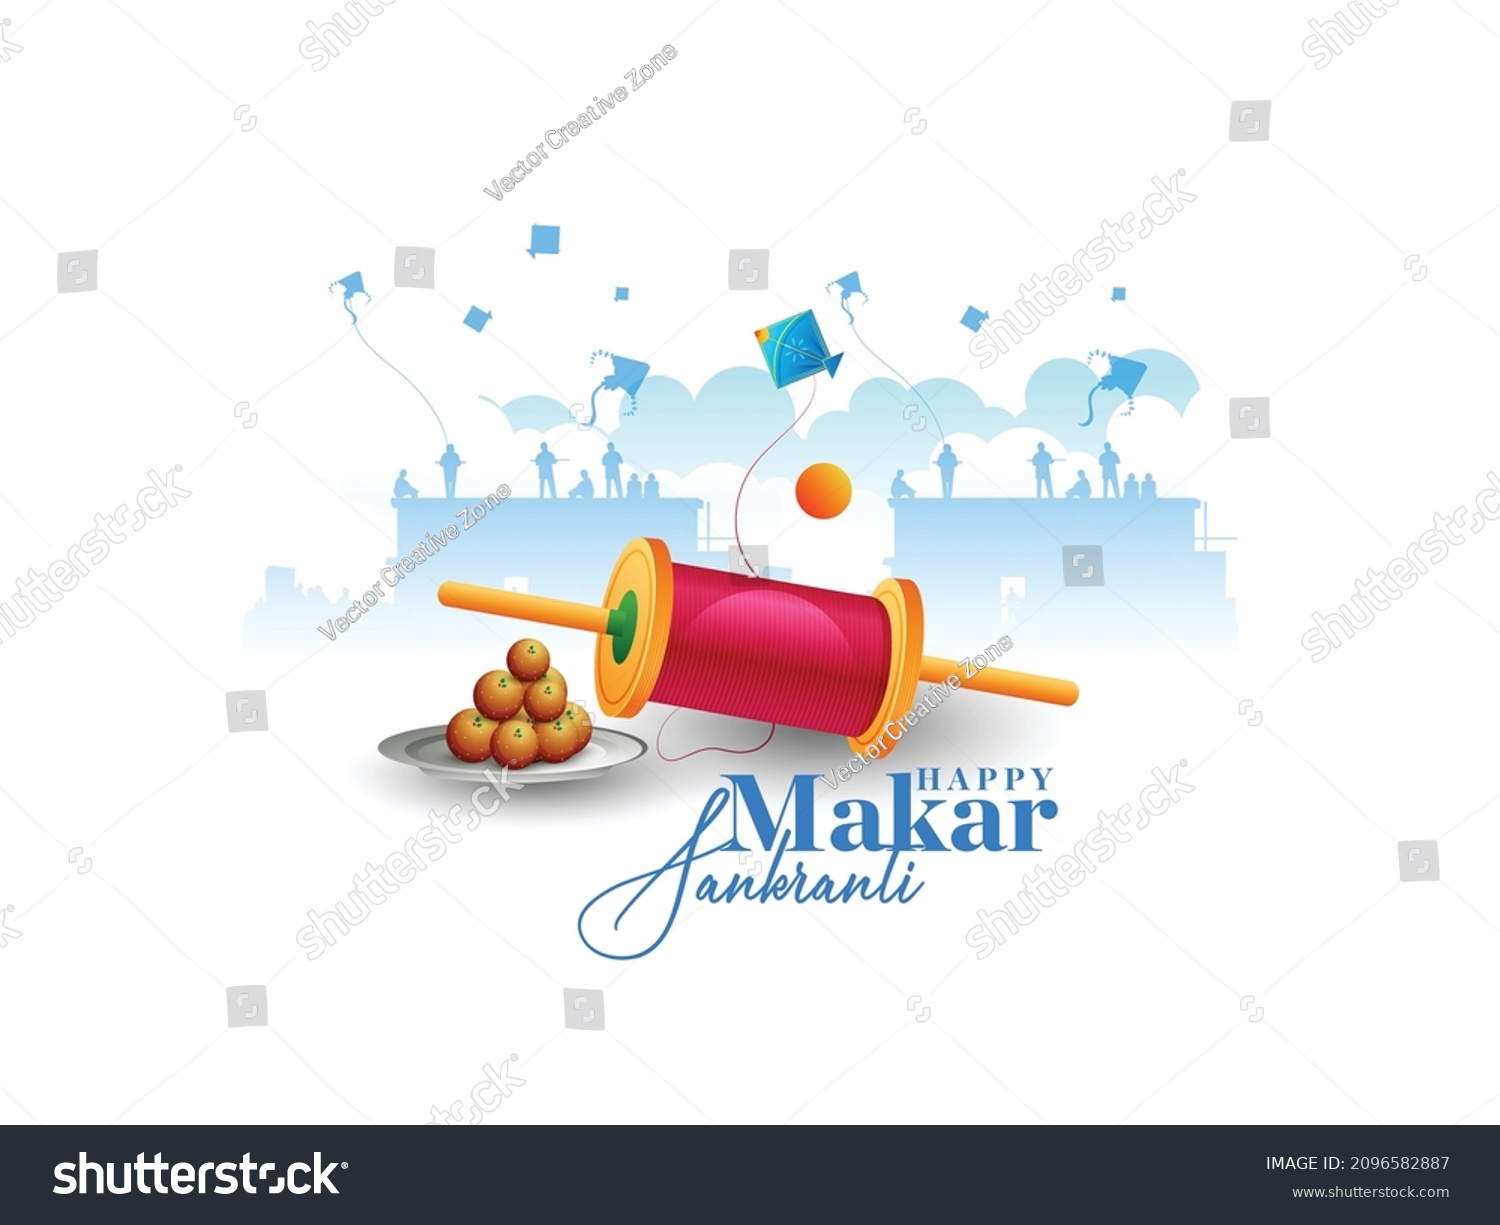 SVG of  illustration of Happy Makar Sankranti holiday India festival
 svg